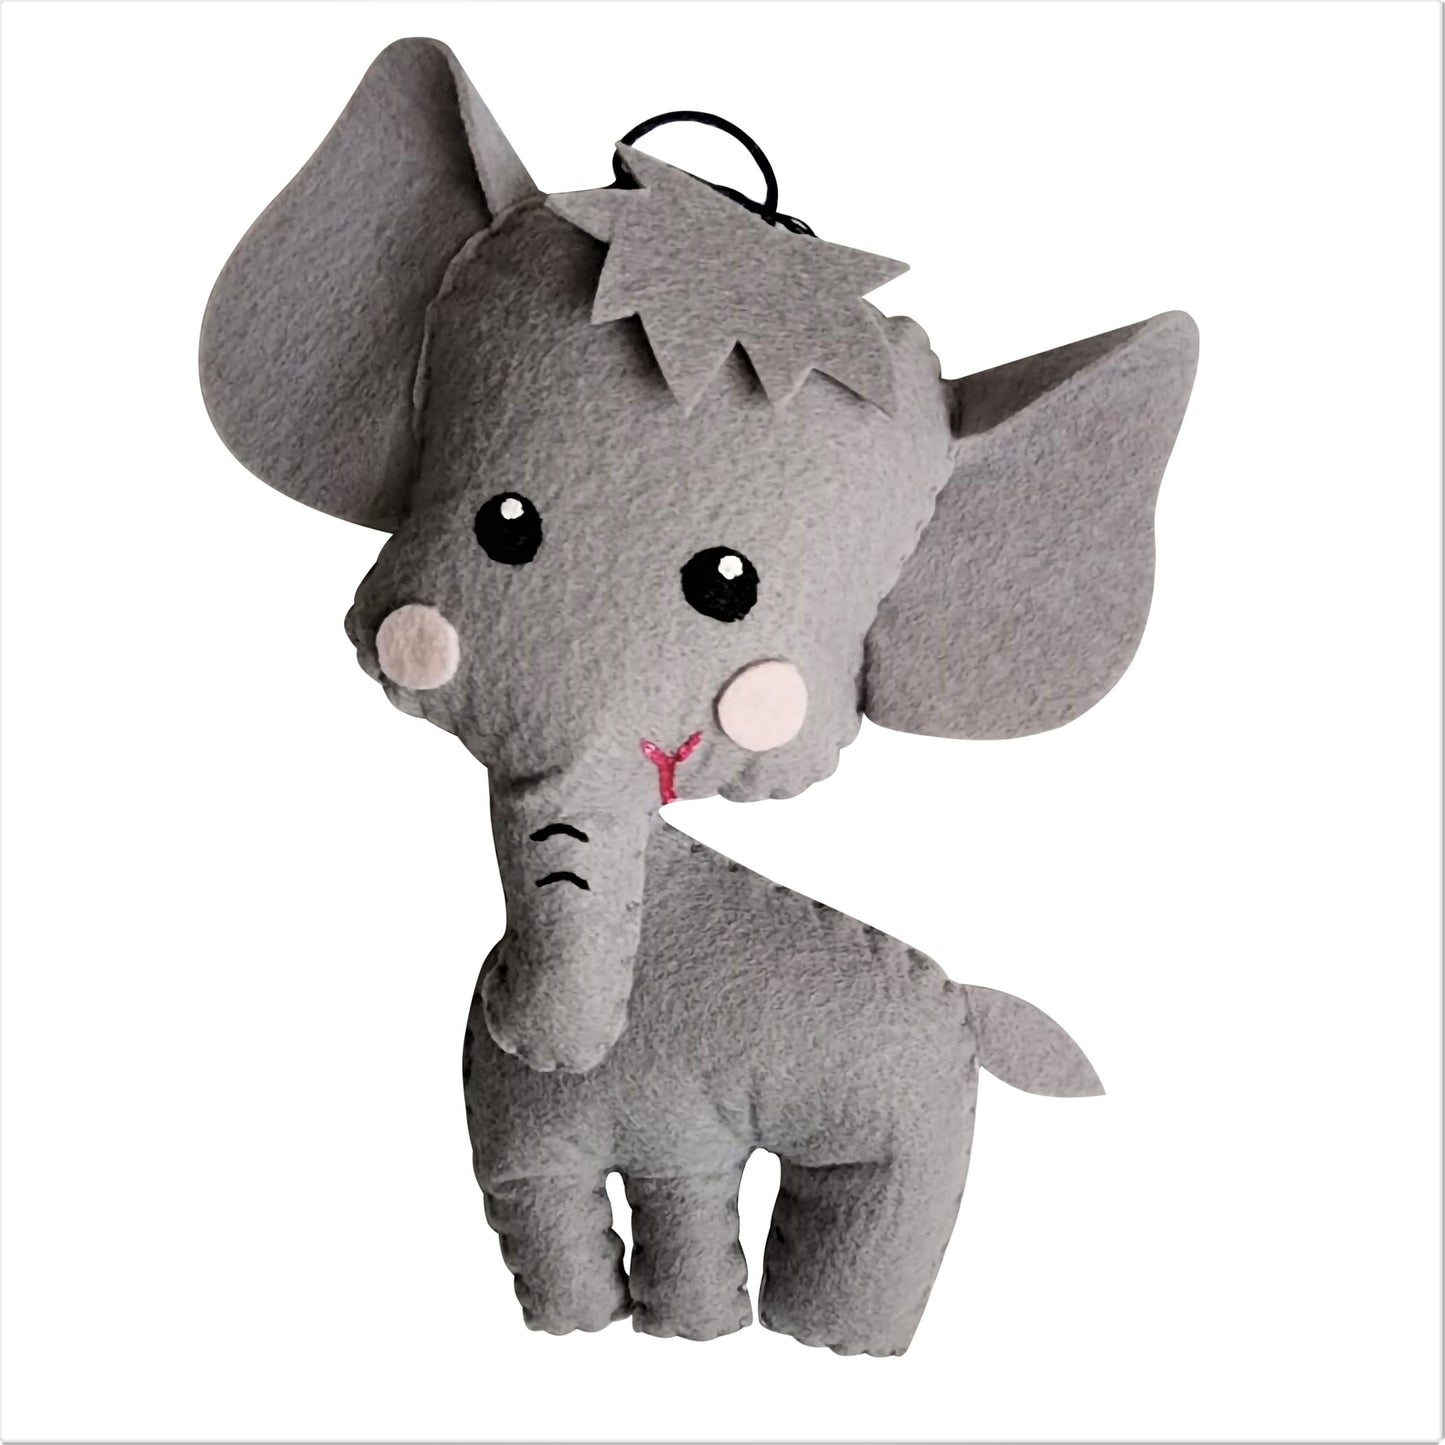 Trunkie - The Adorable Elephant